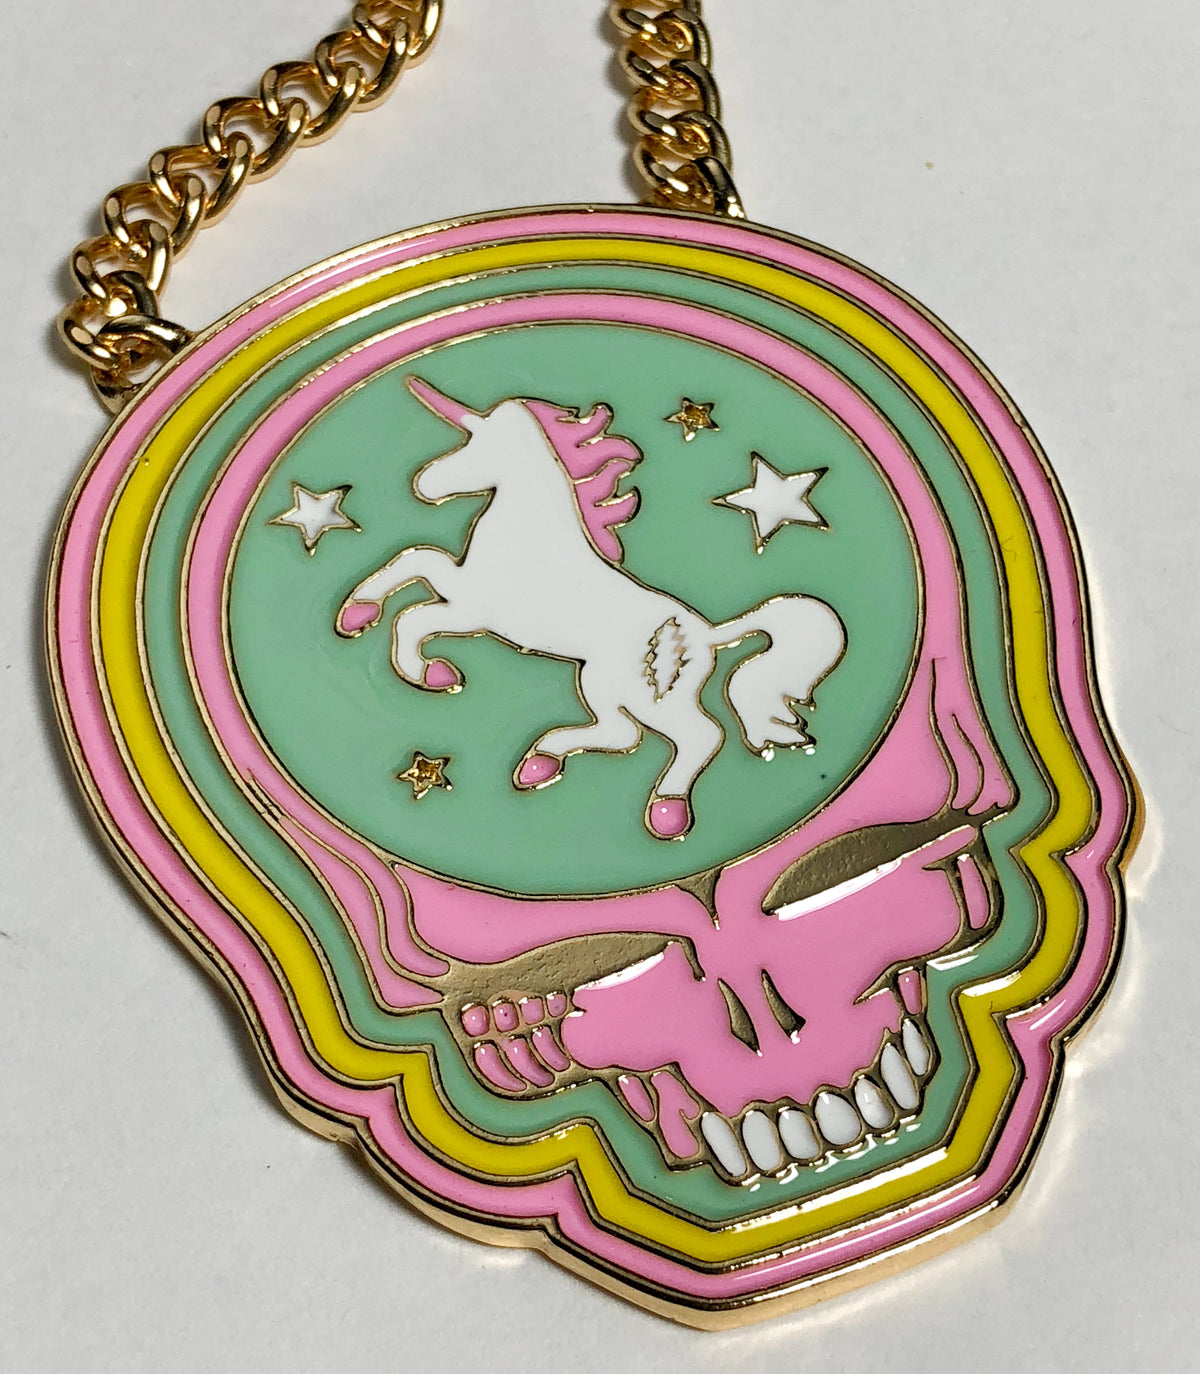 TRiXY STARR X GRATEFUL DEAD - Unicorn Stealie necklace, Gold